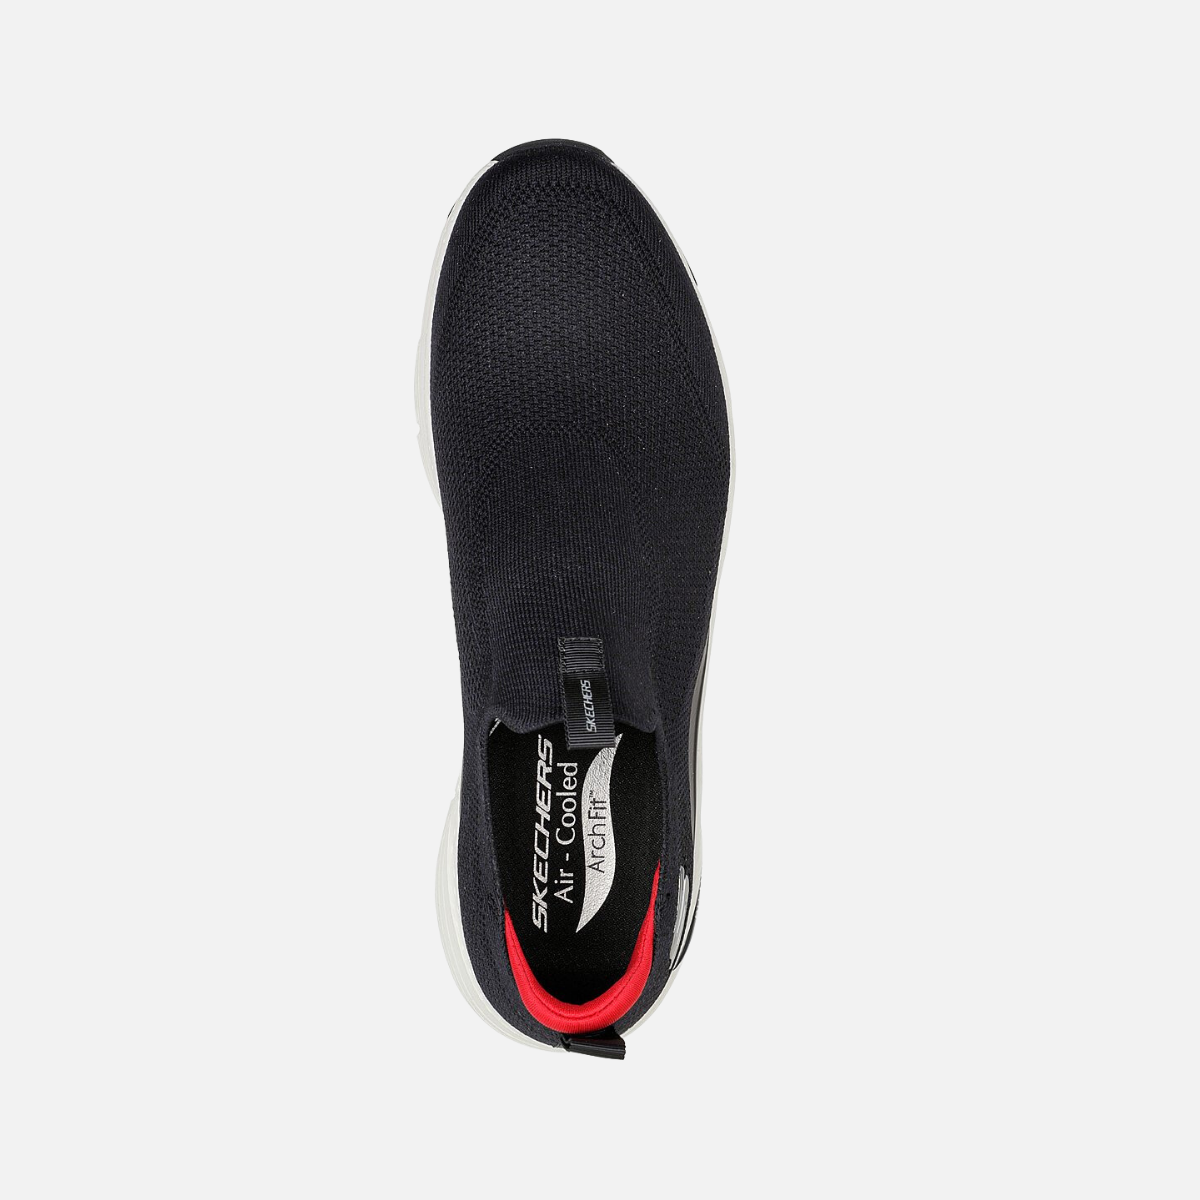 Skechers Arch Fit Mens Shoes -Black/white